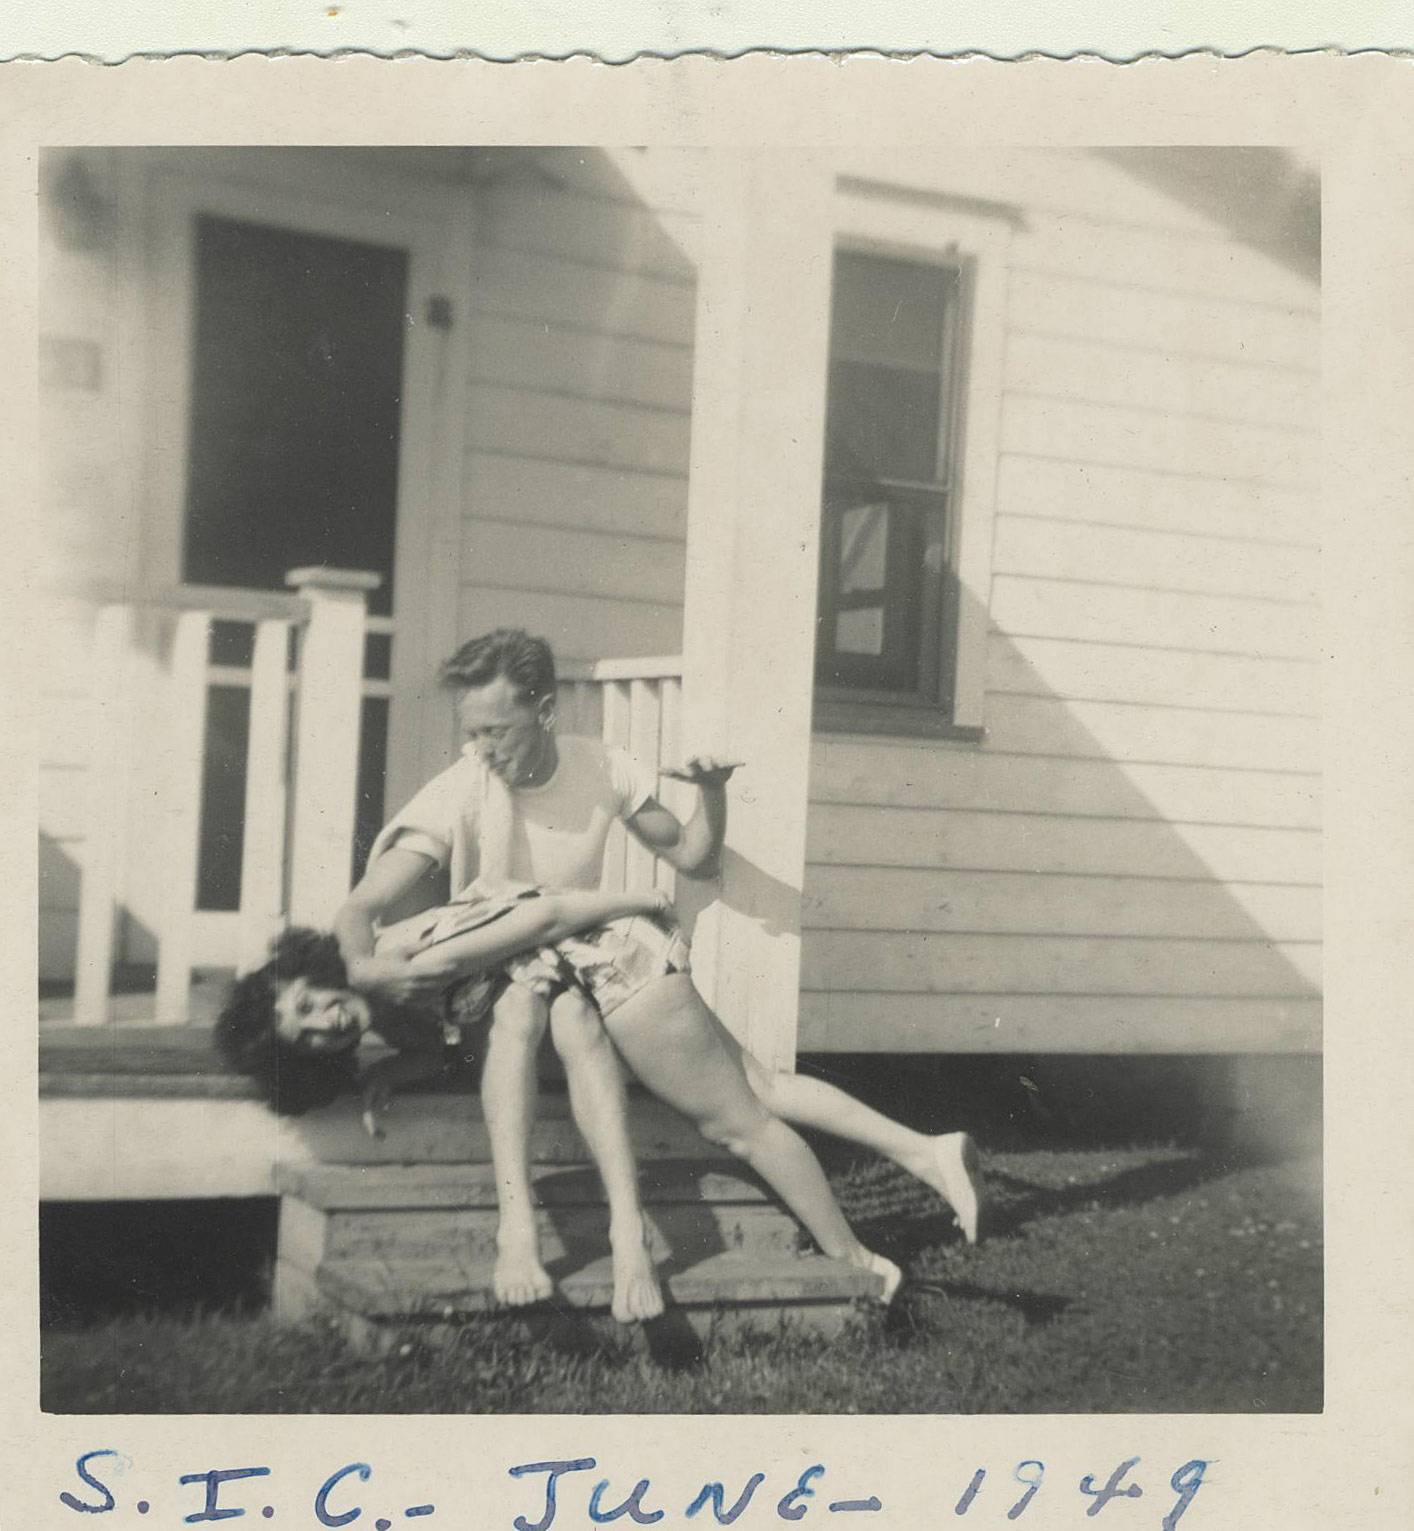 june 1949 birthday spanking at S.I.C.